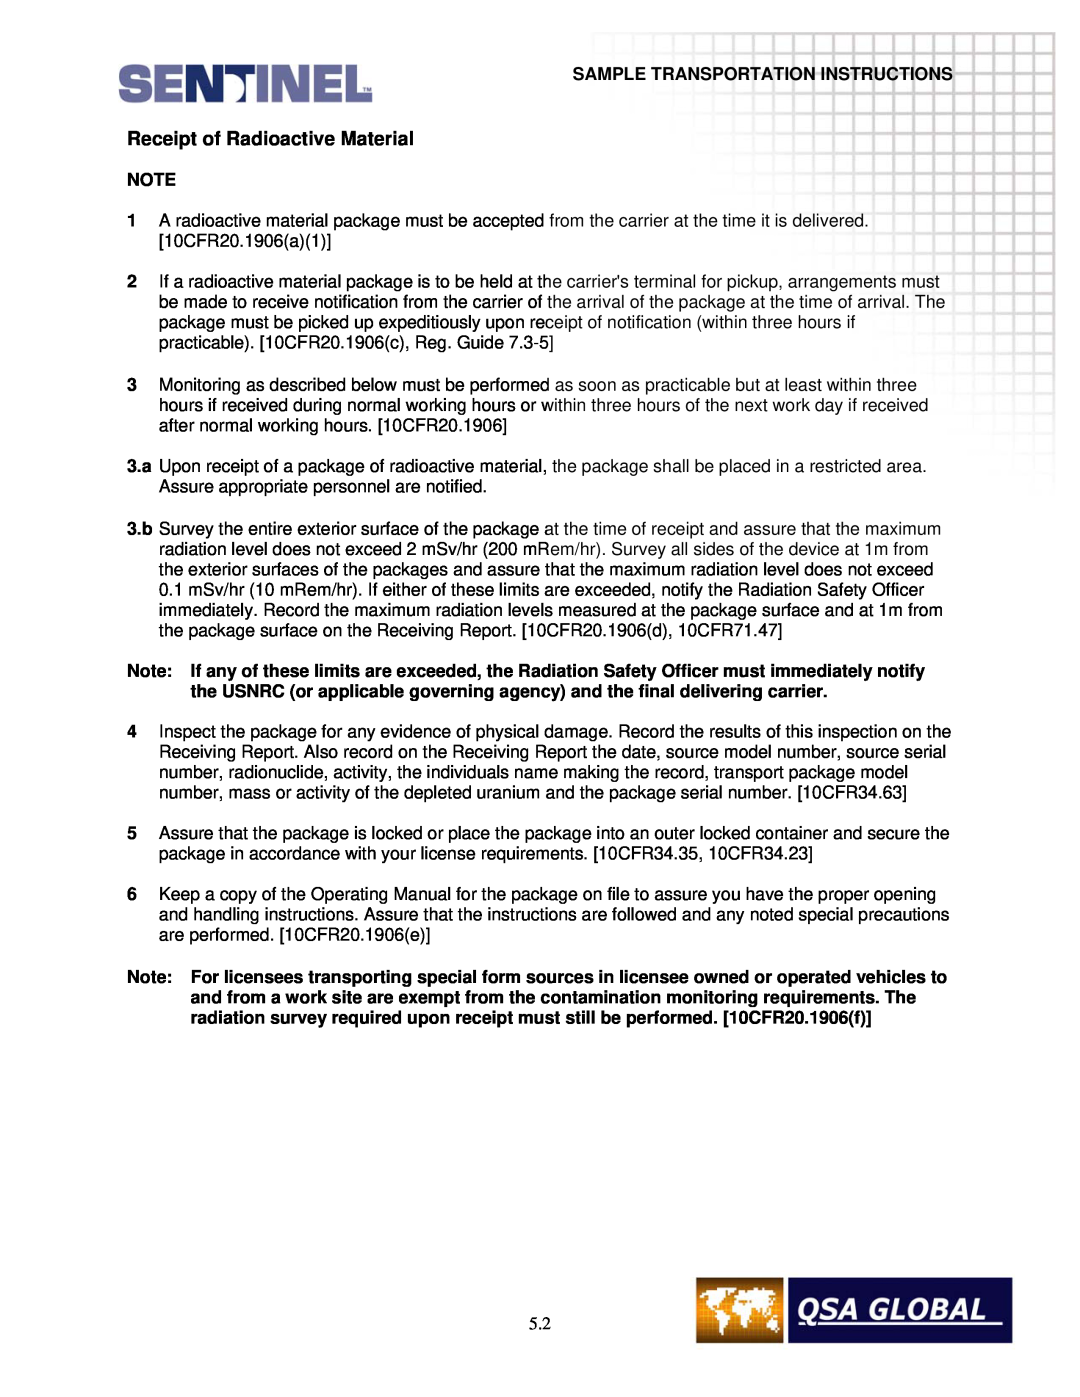 Sigma projetor manual Receipt of Radioactive Material, Sample Transportation Instructions 